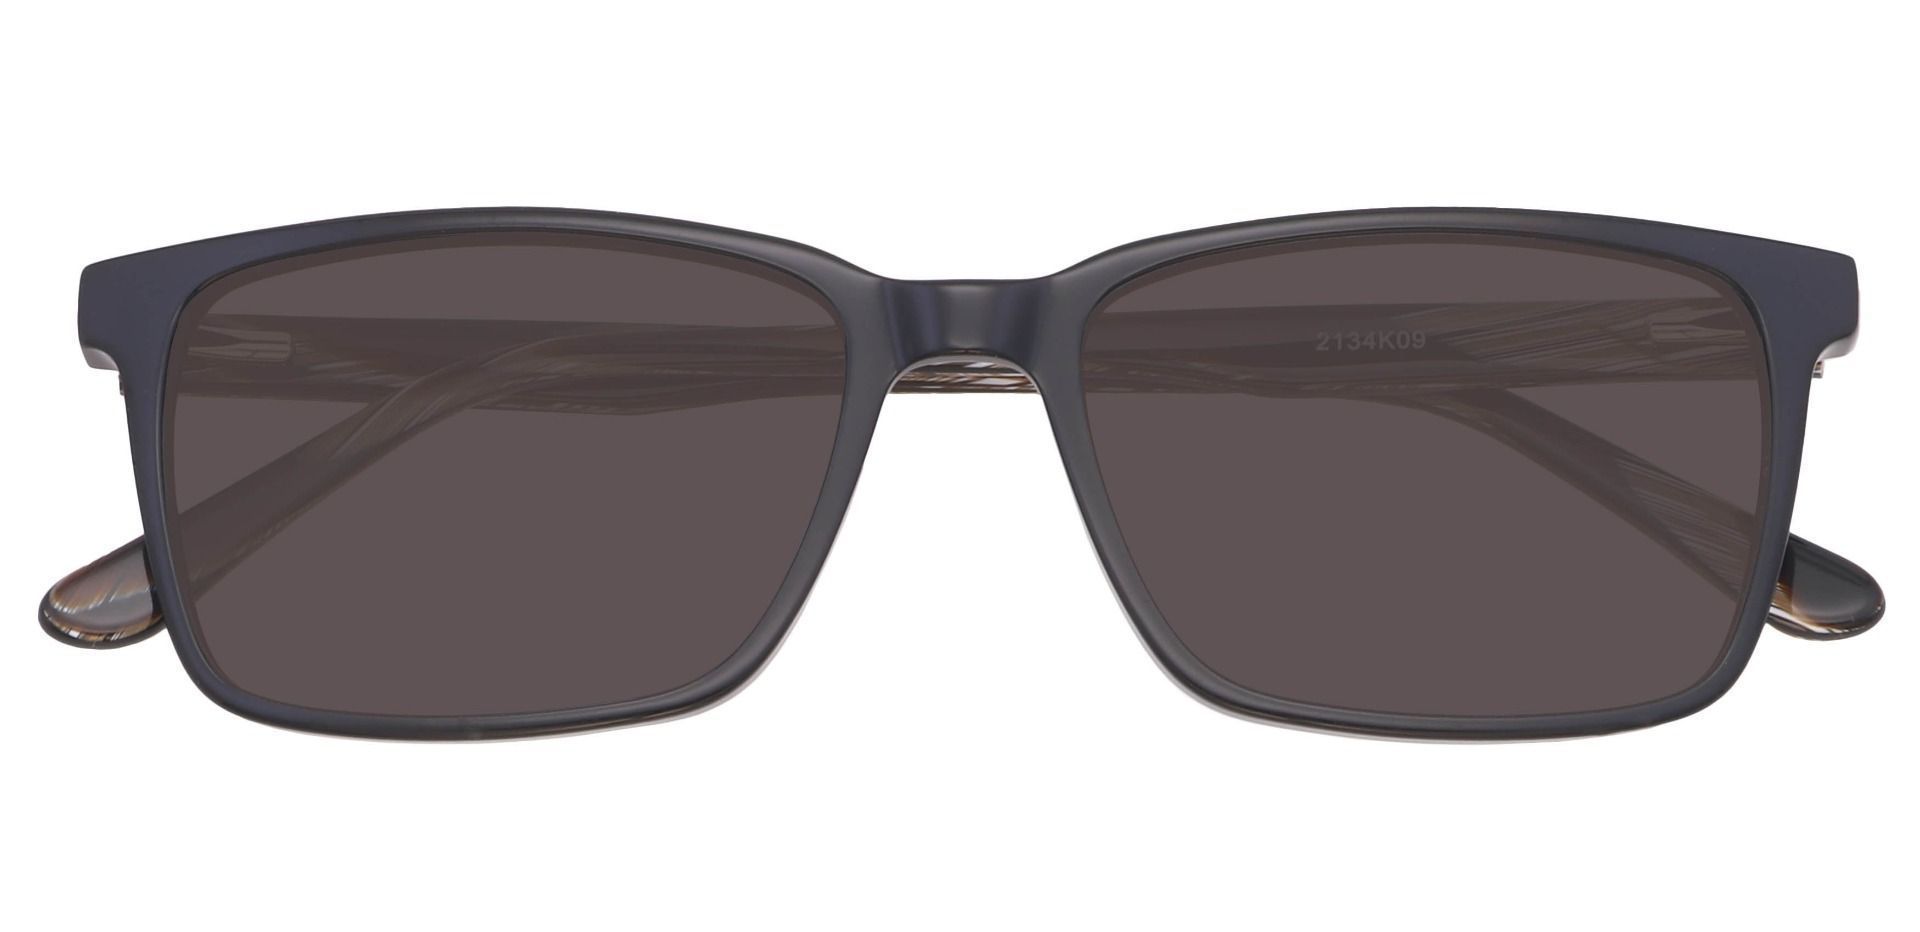 Venice Rectangle Non-Rx Sunglasses - Black Frame With Gray Lenses